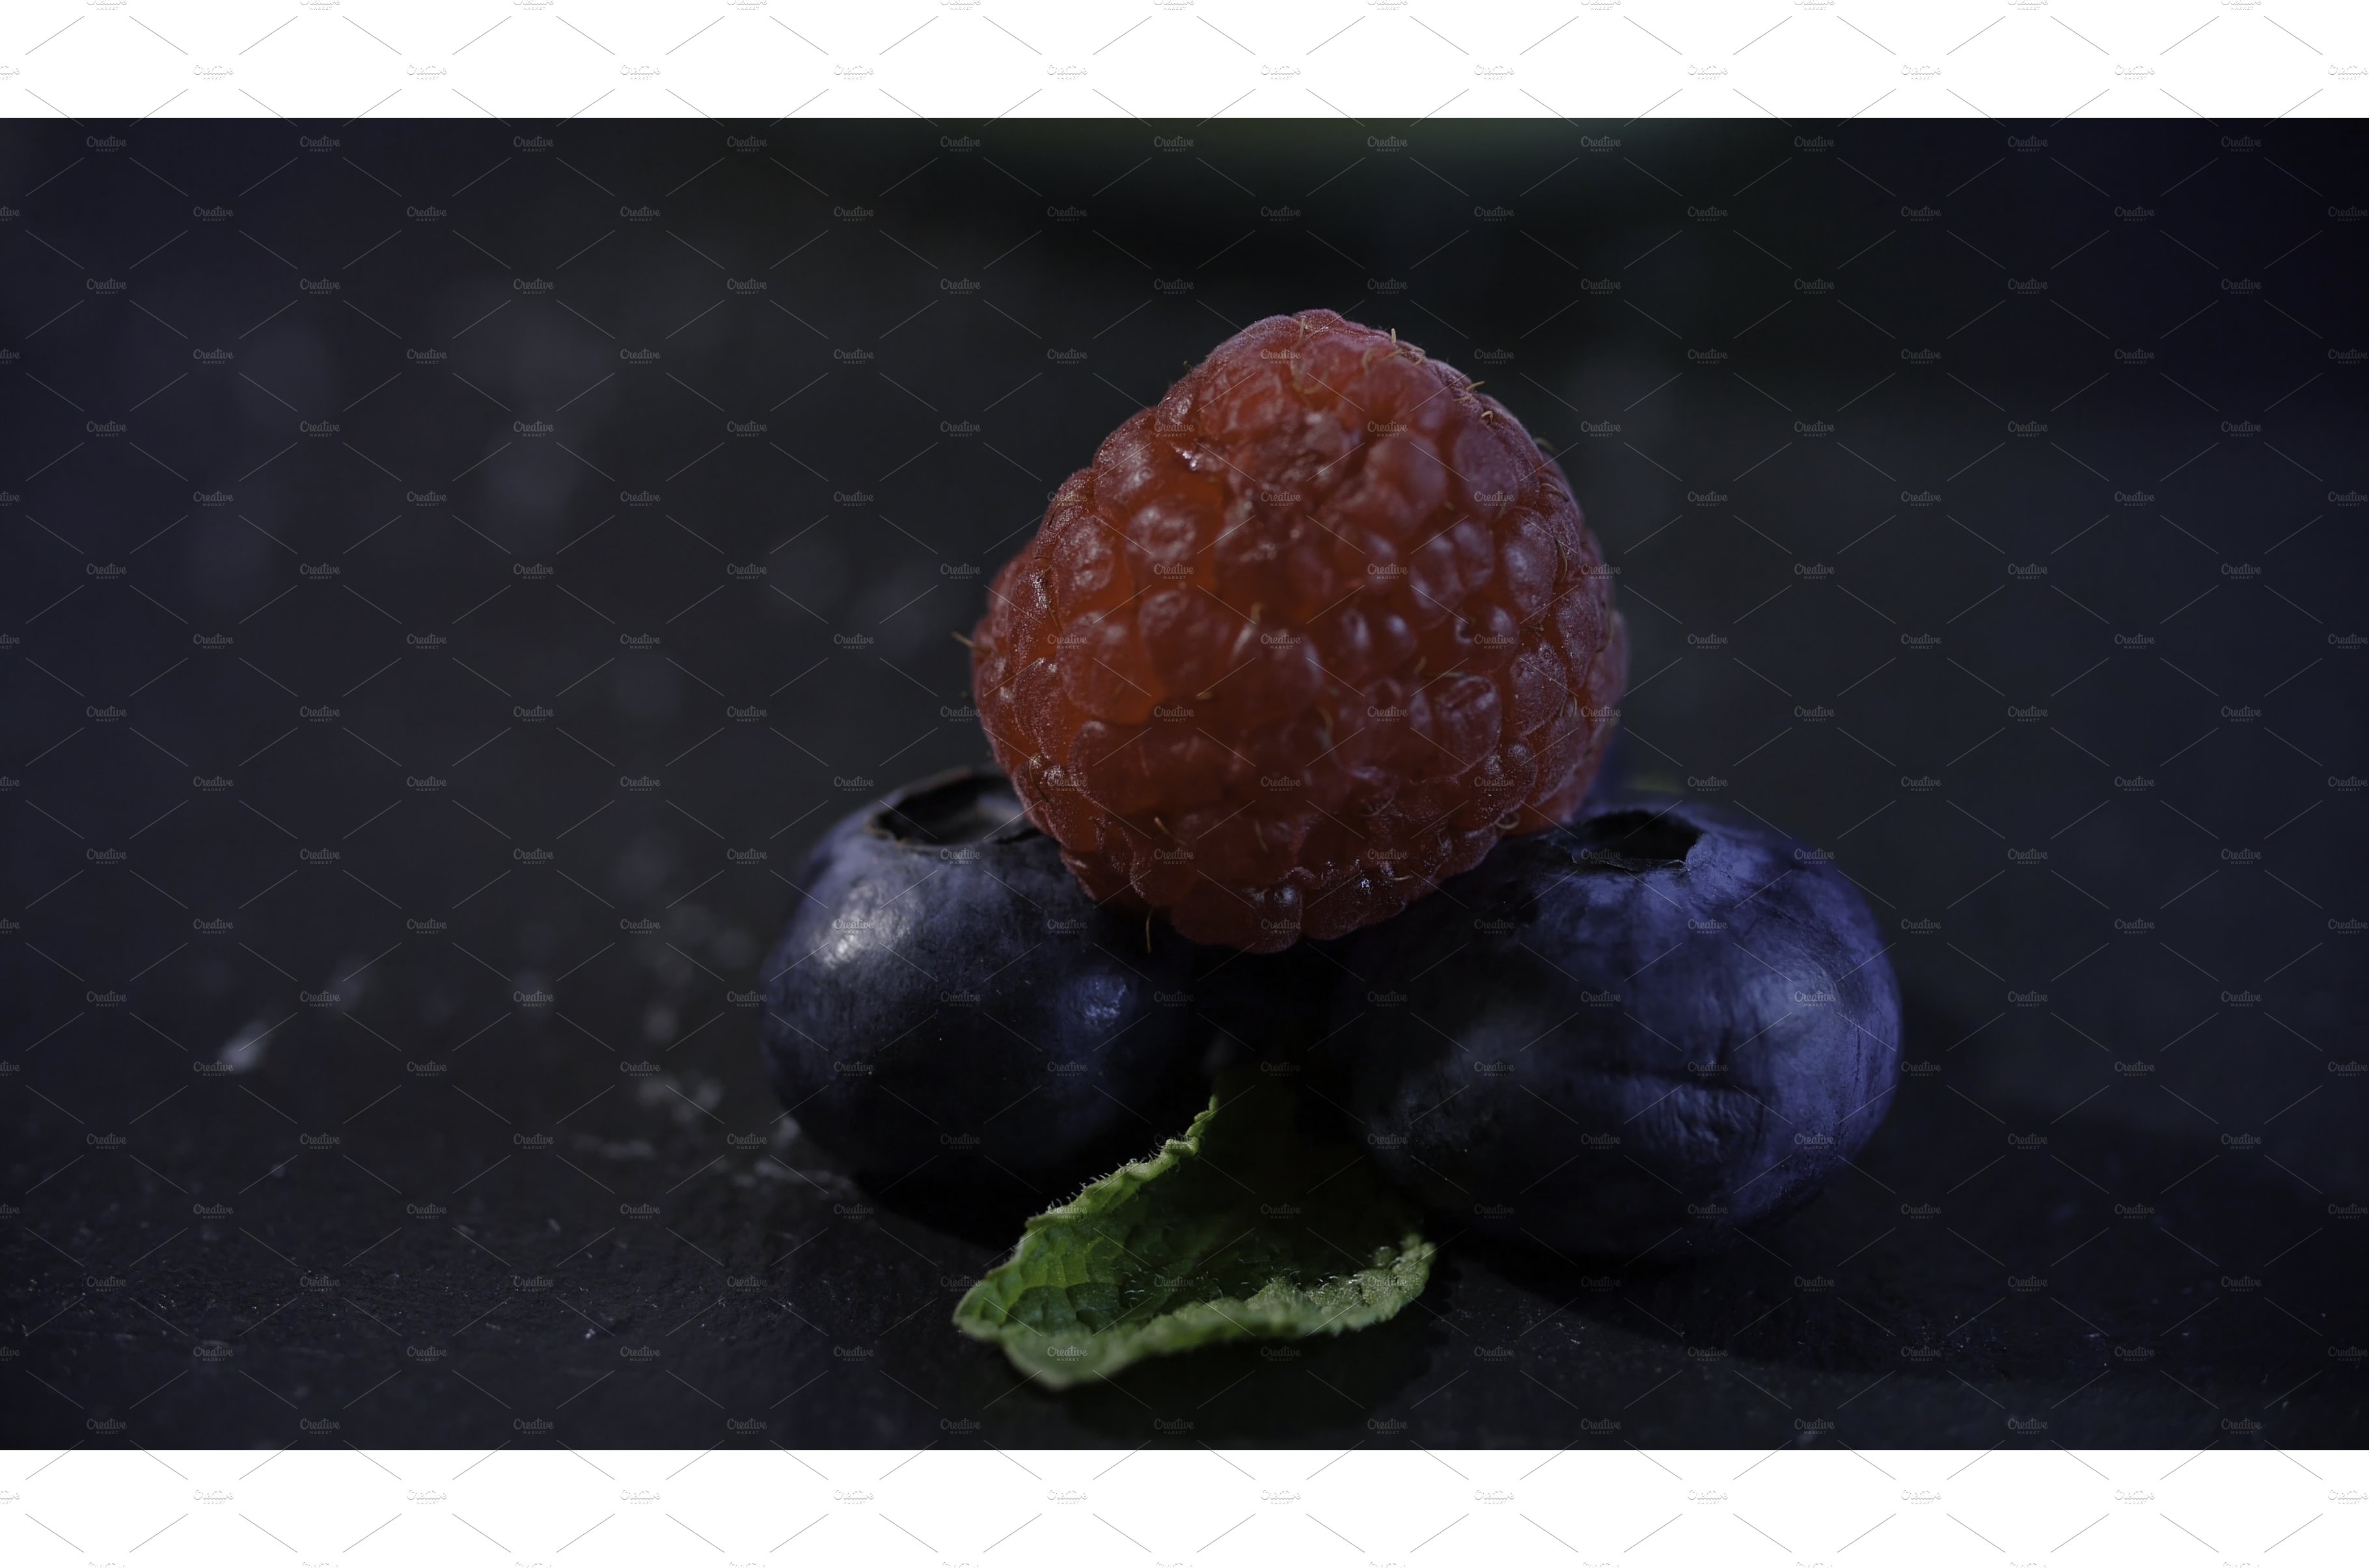 Fresh fruits - blueberry, raspberry cover image.